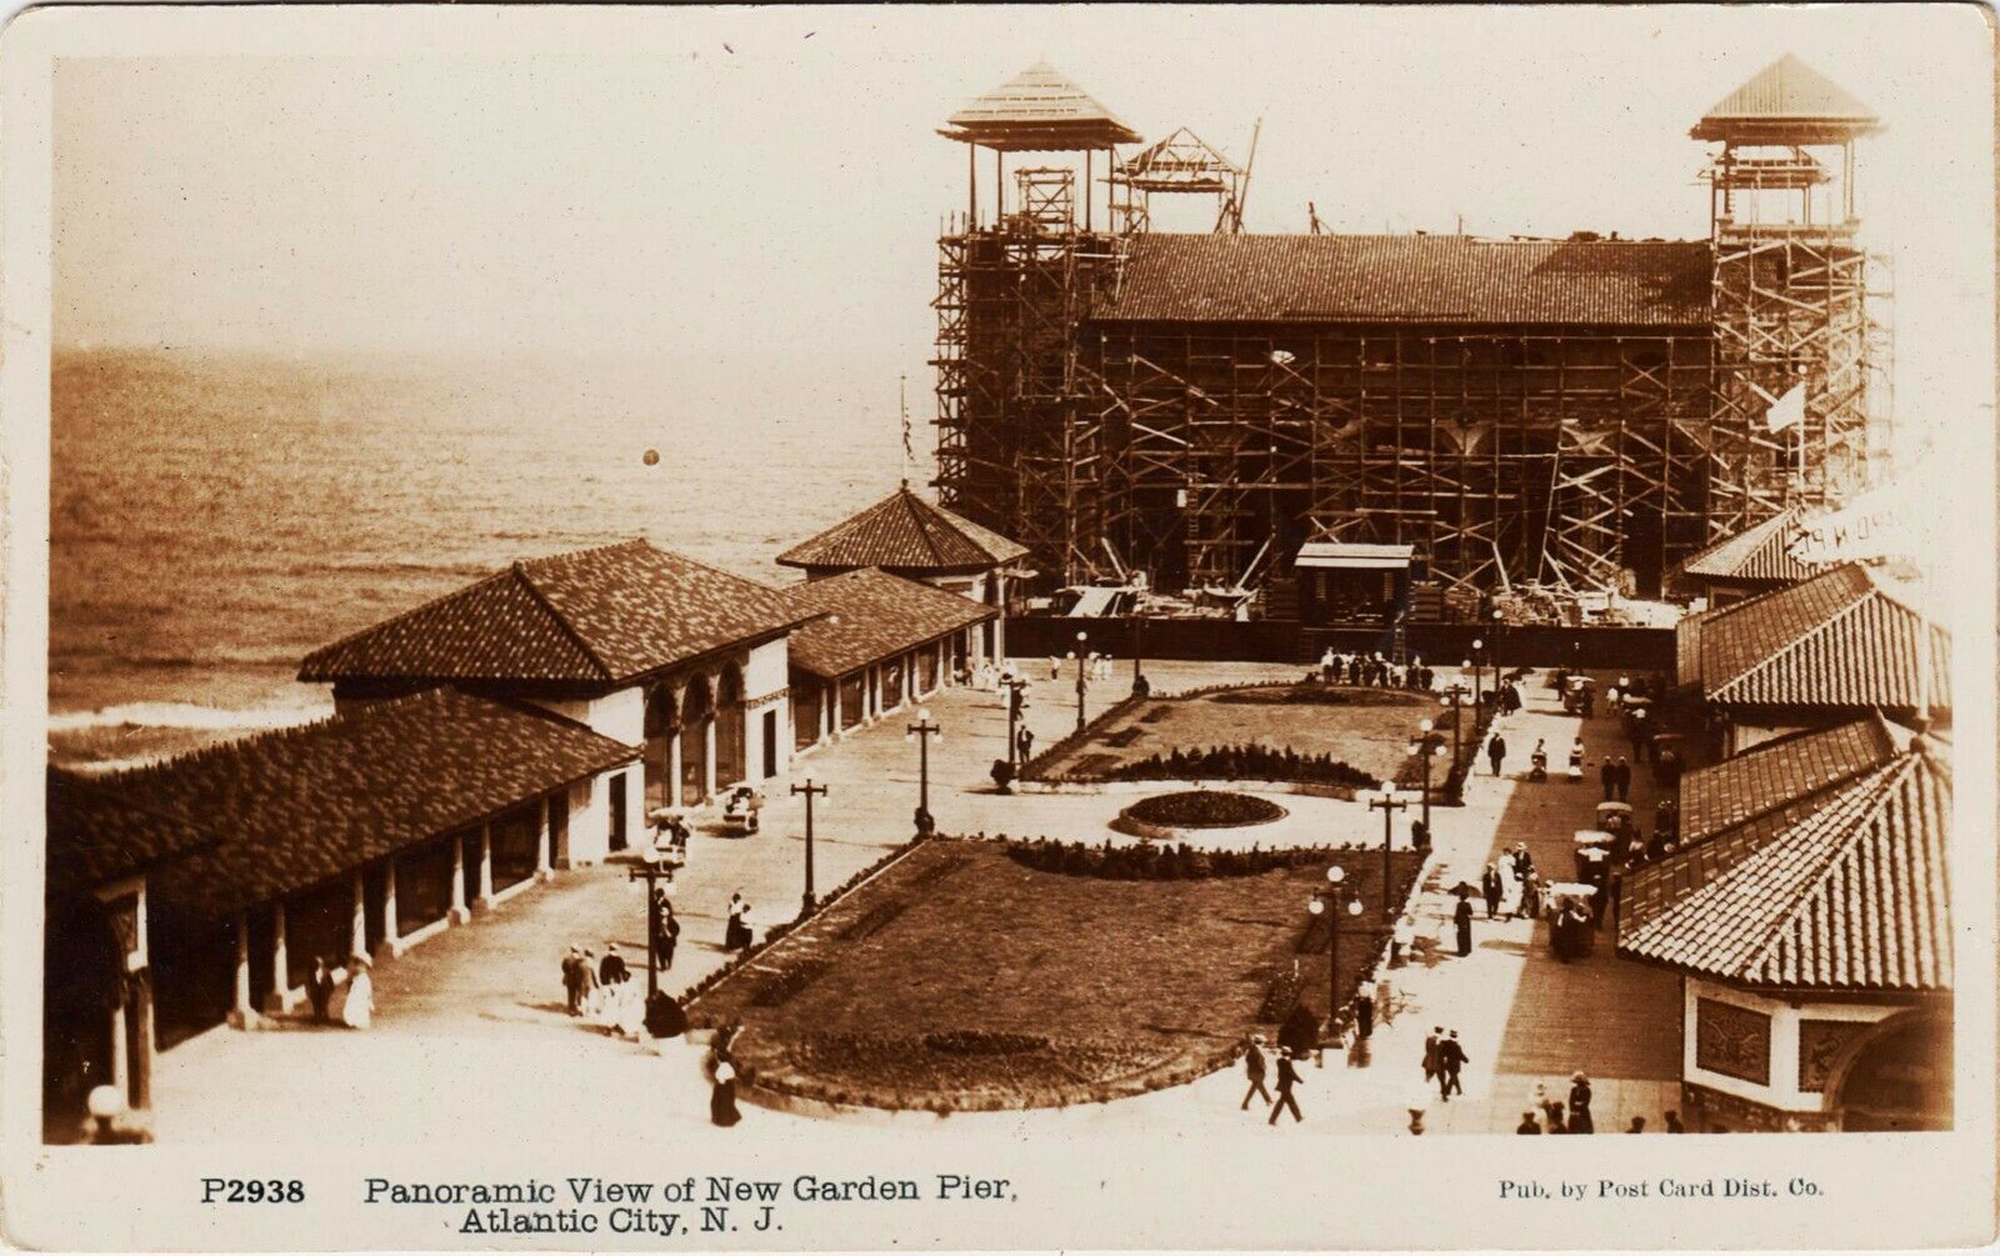 Atlantic City - Construction of the theater on Garden Pier